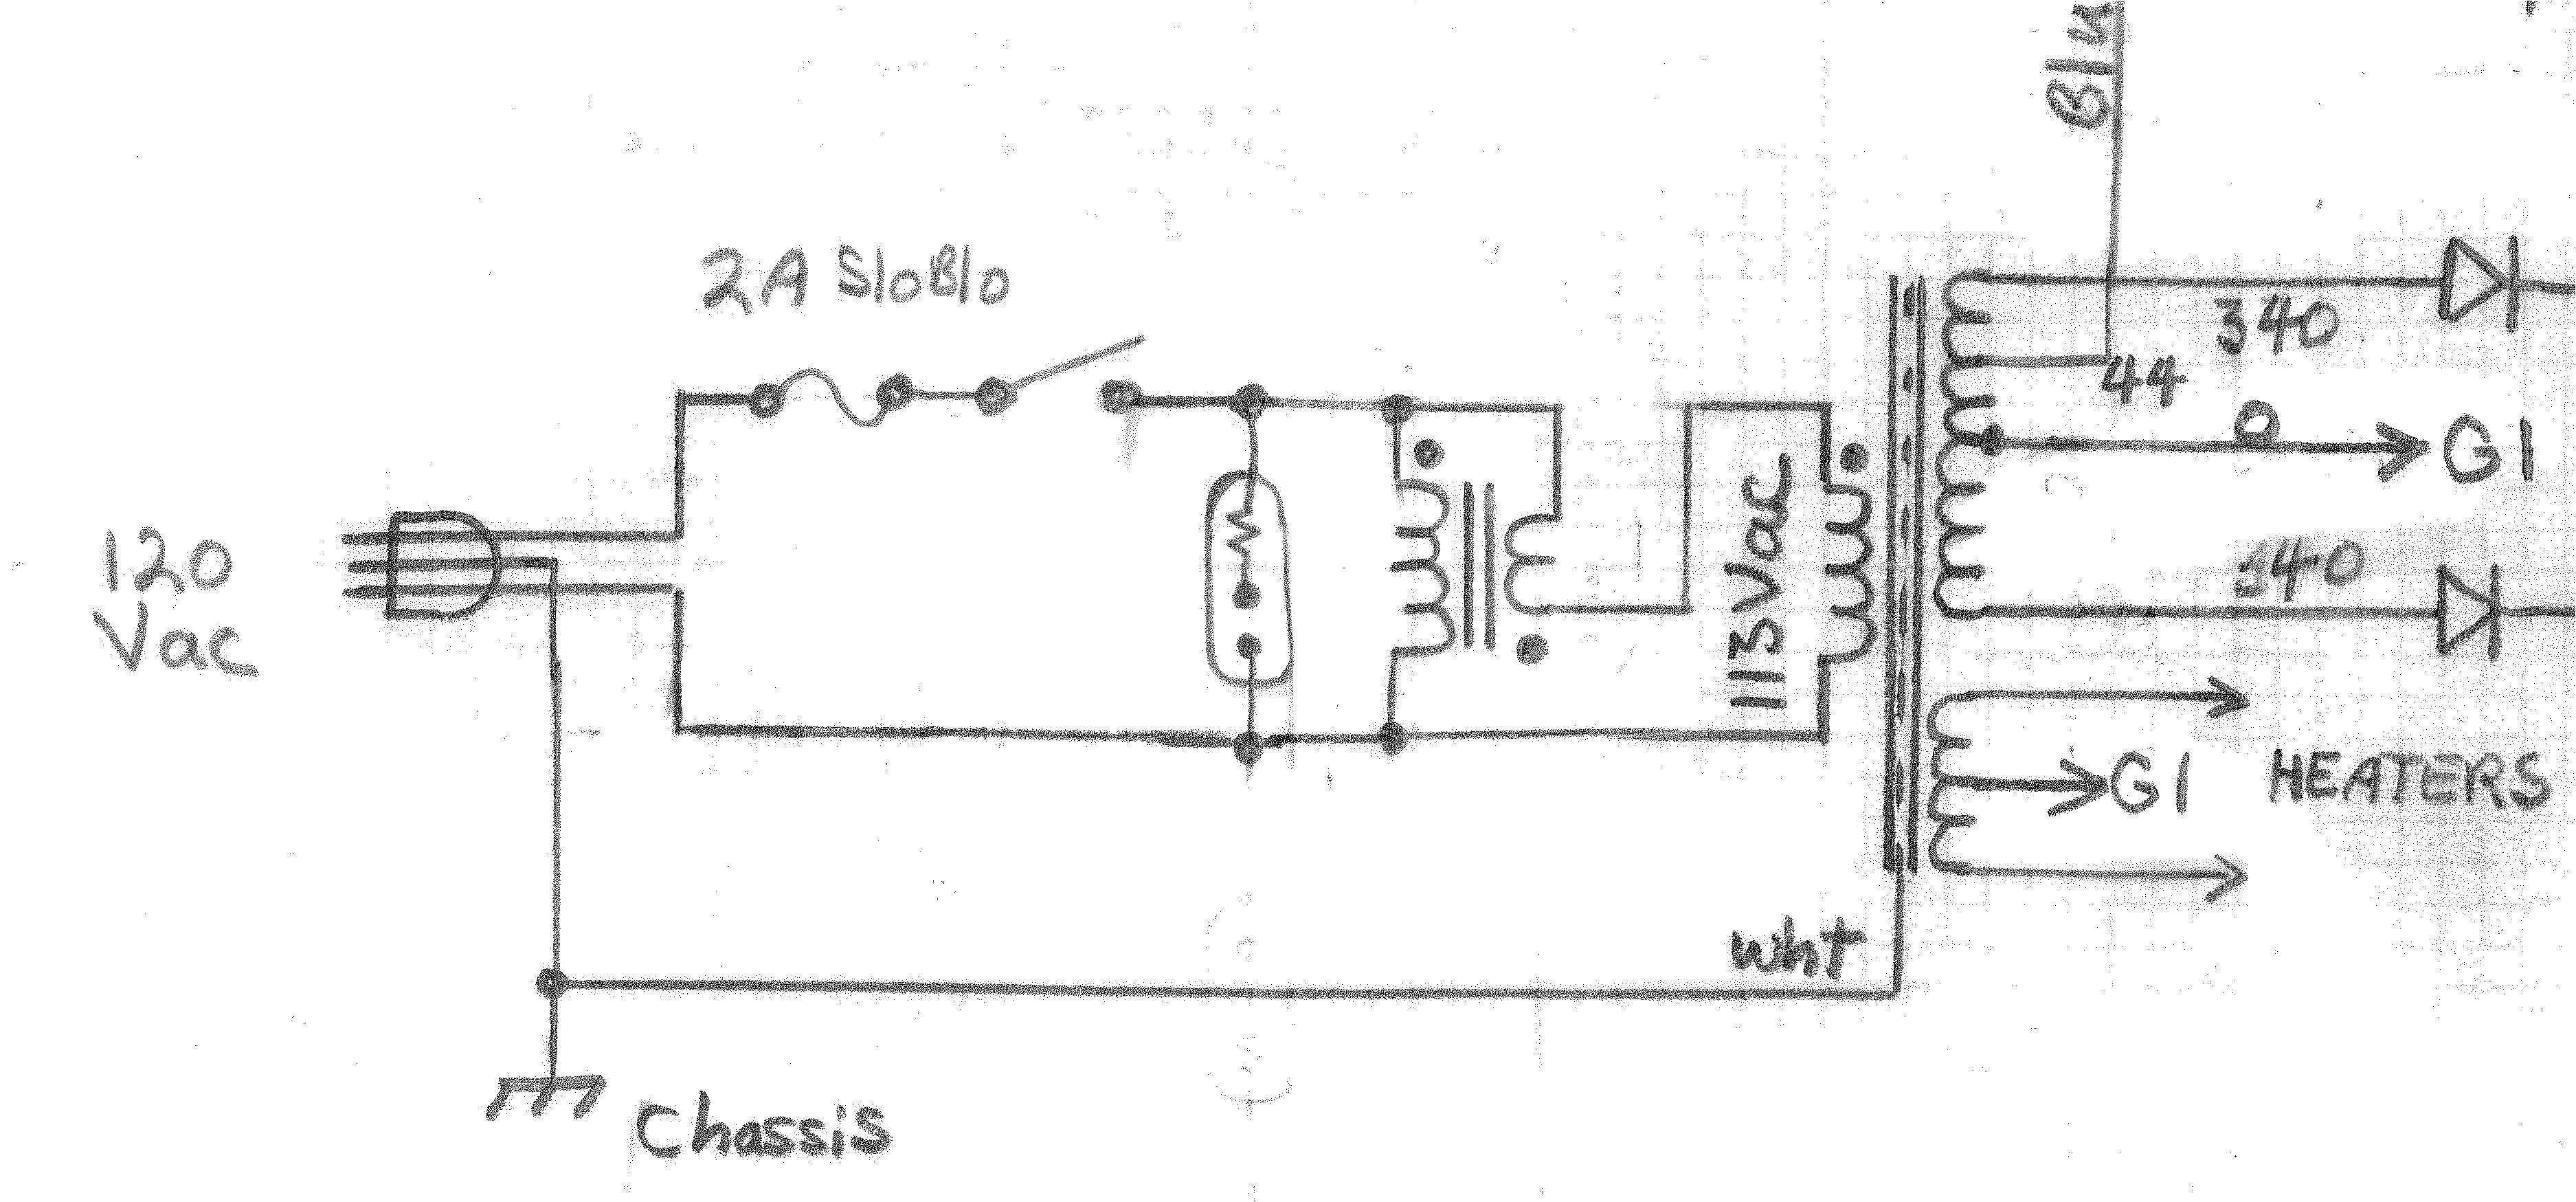 buck boost transformer 208 to 240 wiring diagram or buck boost wiring diagram single phase to 480v 46 wiring diagram or buck boost transformer 208 to 240 wiring diagram jpg